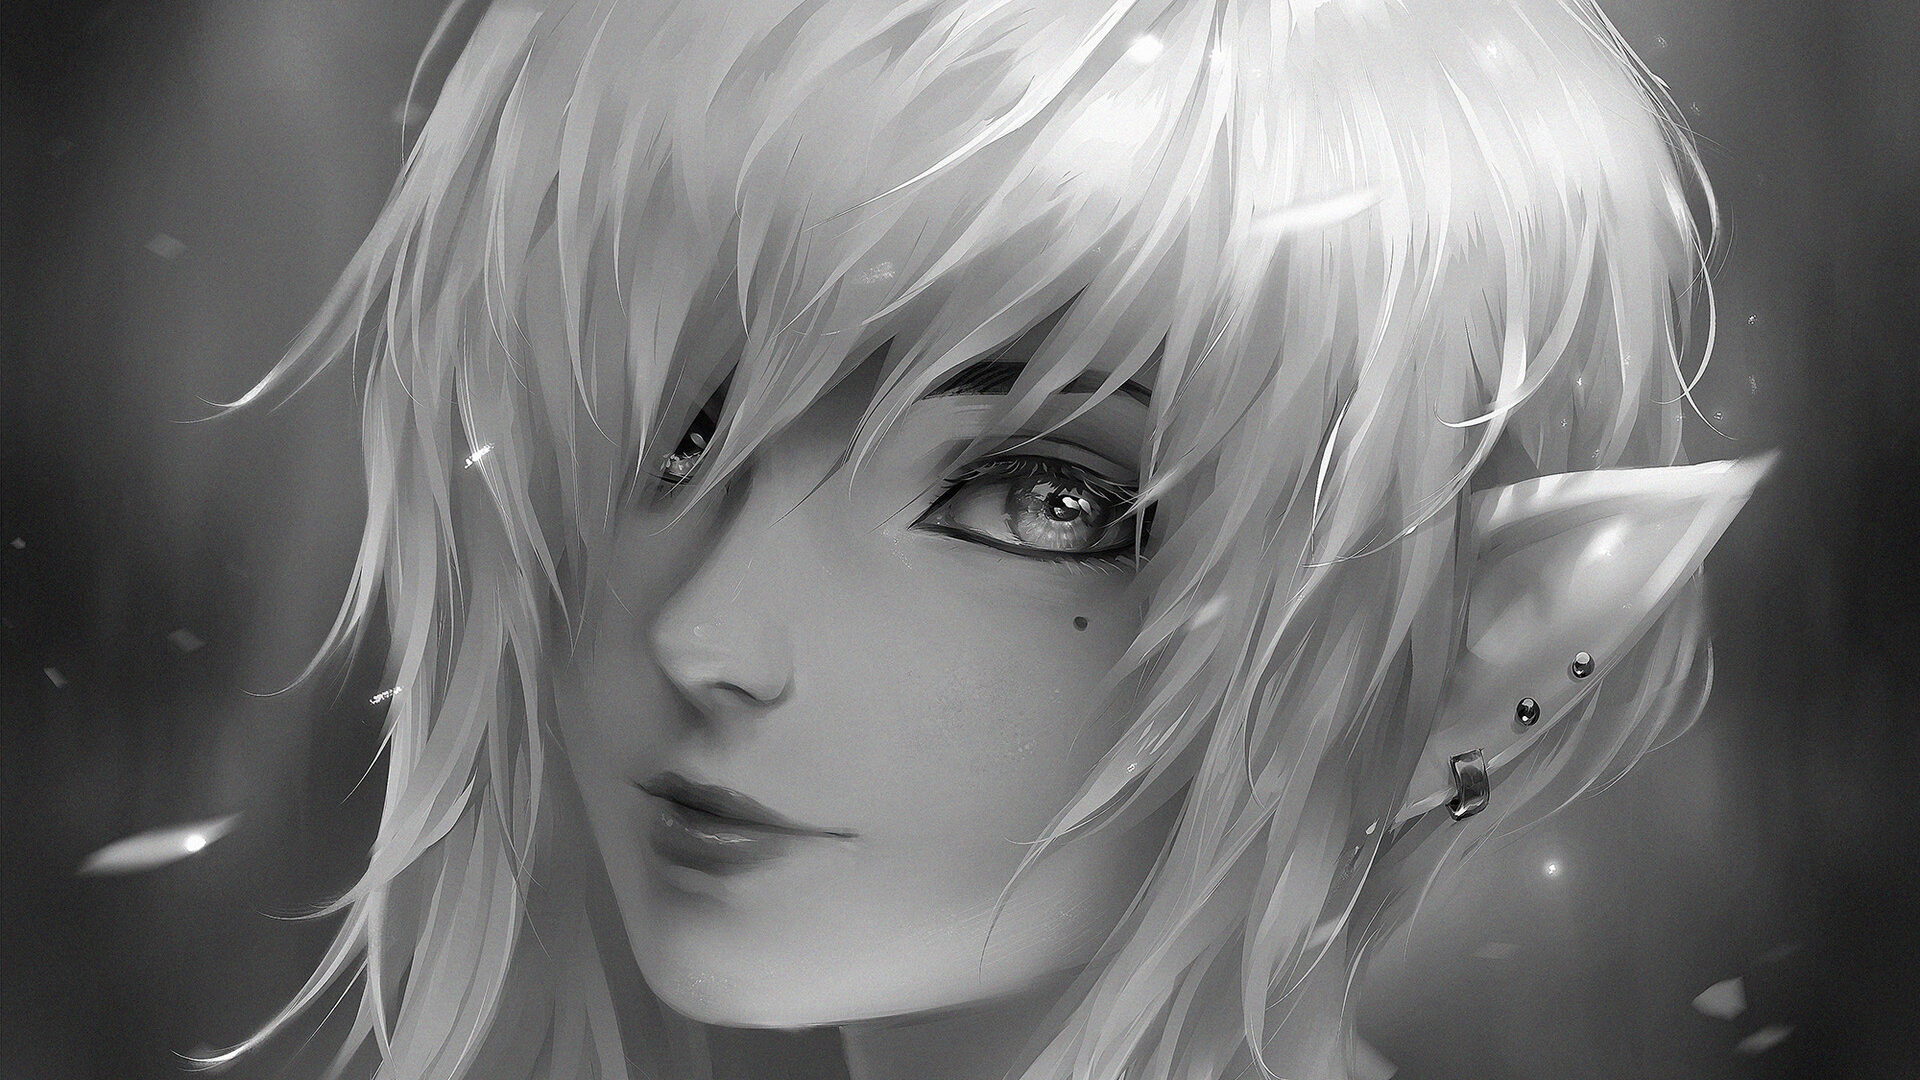 General 1920x1080 digital art women fantasy girl pointy ears piercing blonde short hair smiling